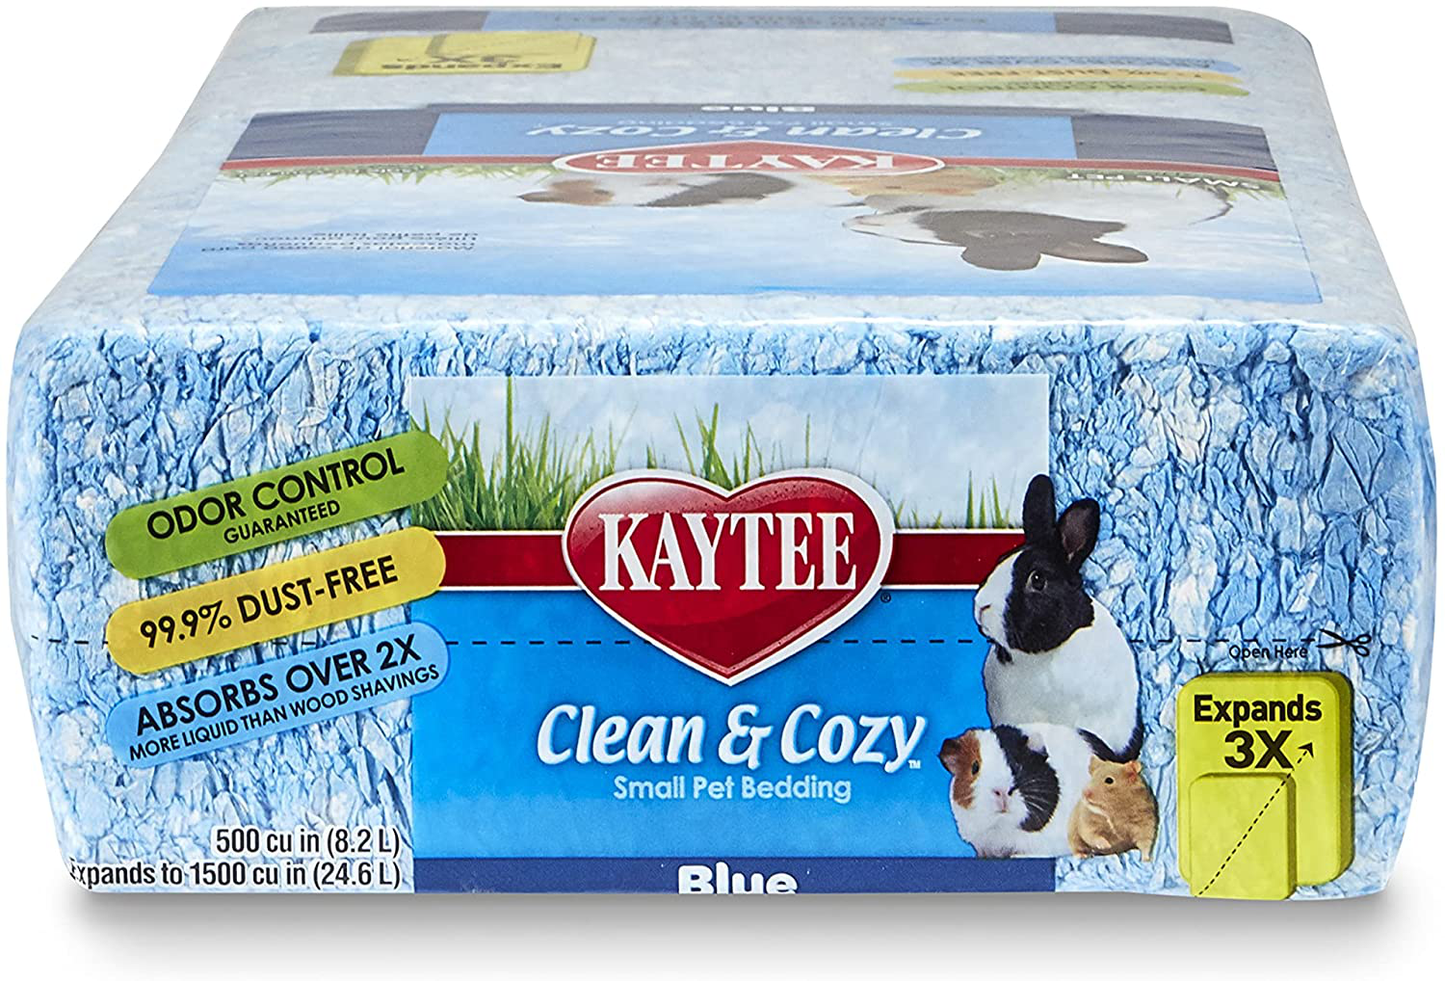 Kaytee Clean & Cozy Blue Small Animal Bedding